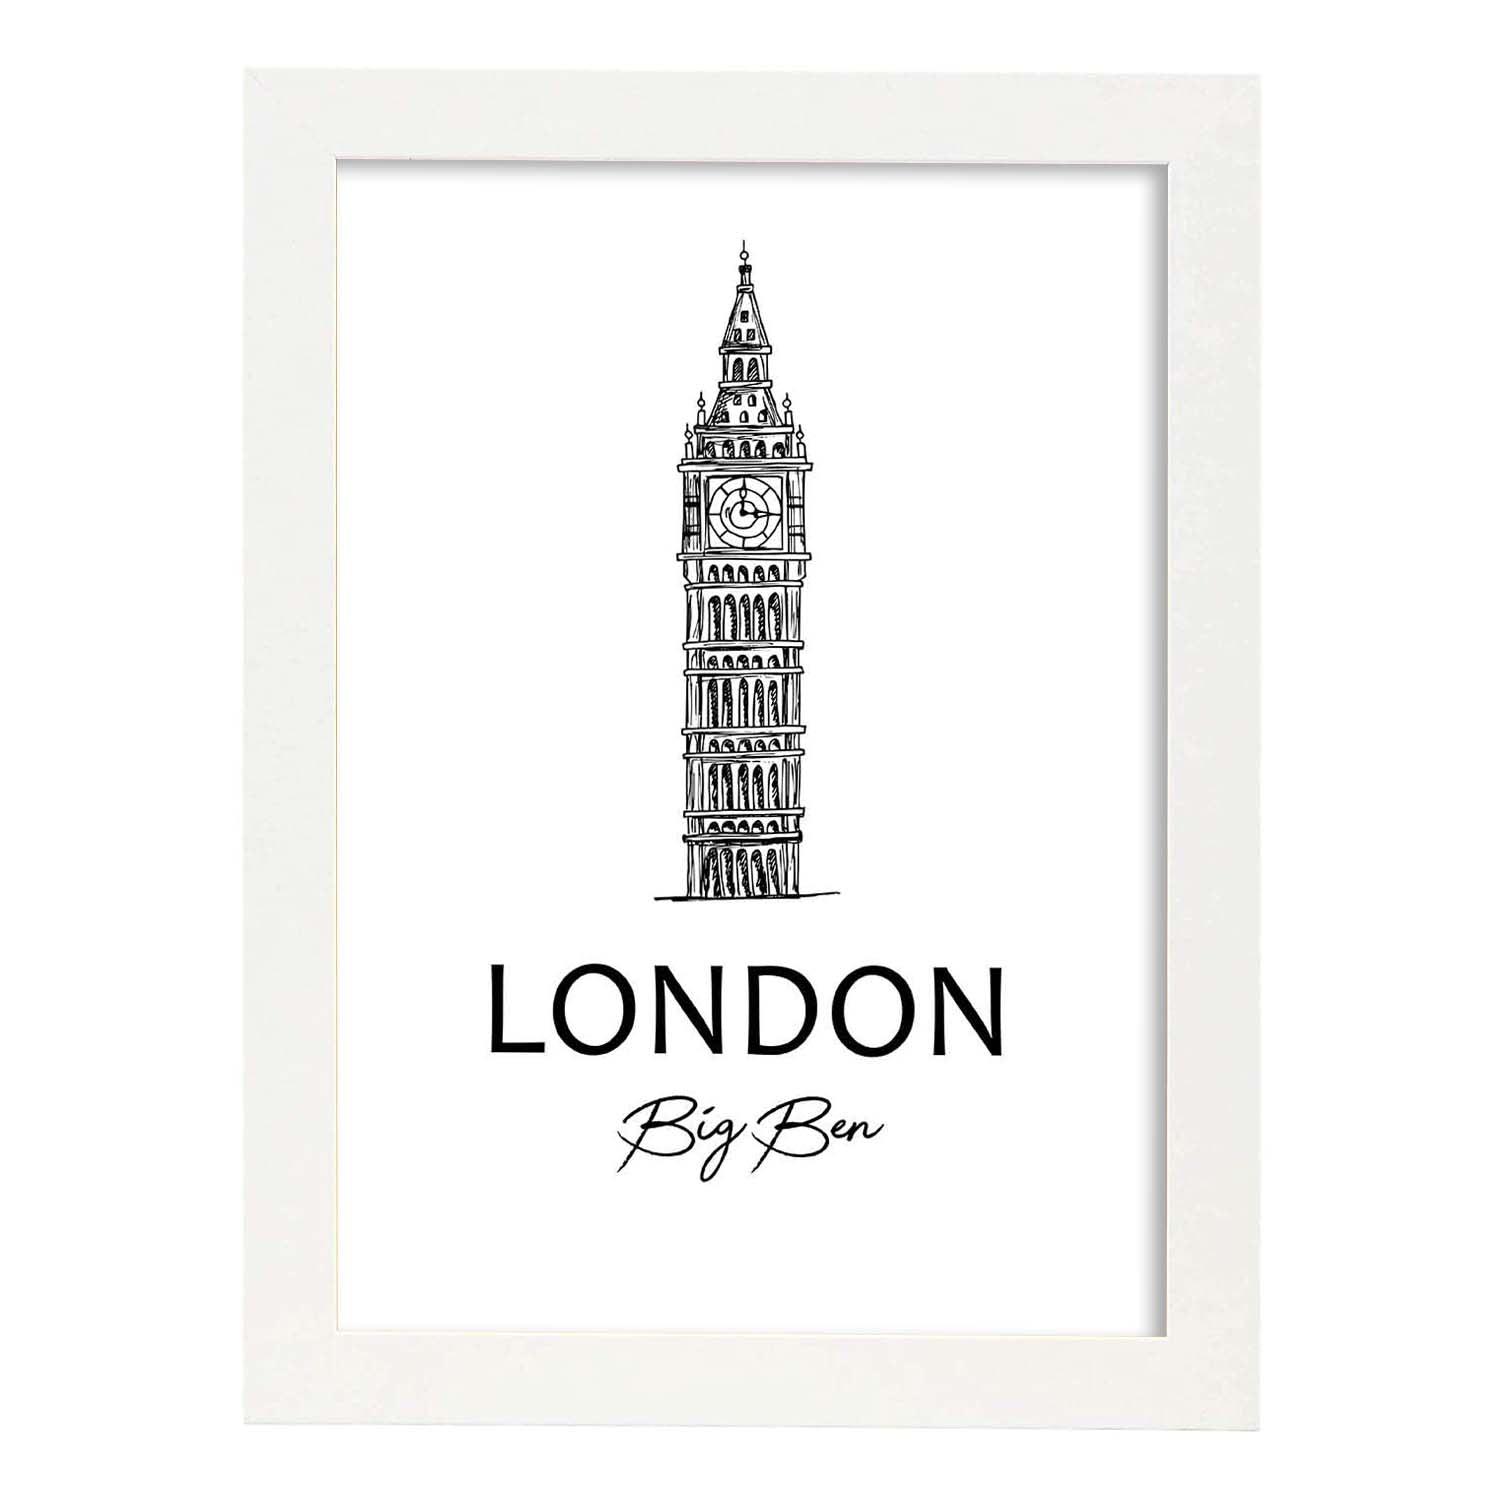 Poster de Londres - Big Ben. Láminas con monumentos de ciudades.-Artwork-Nacnic-A3-Marco Blanco-Nacnic Estudio SL